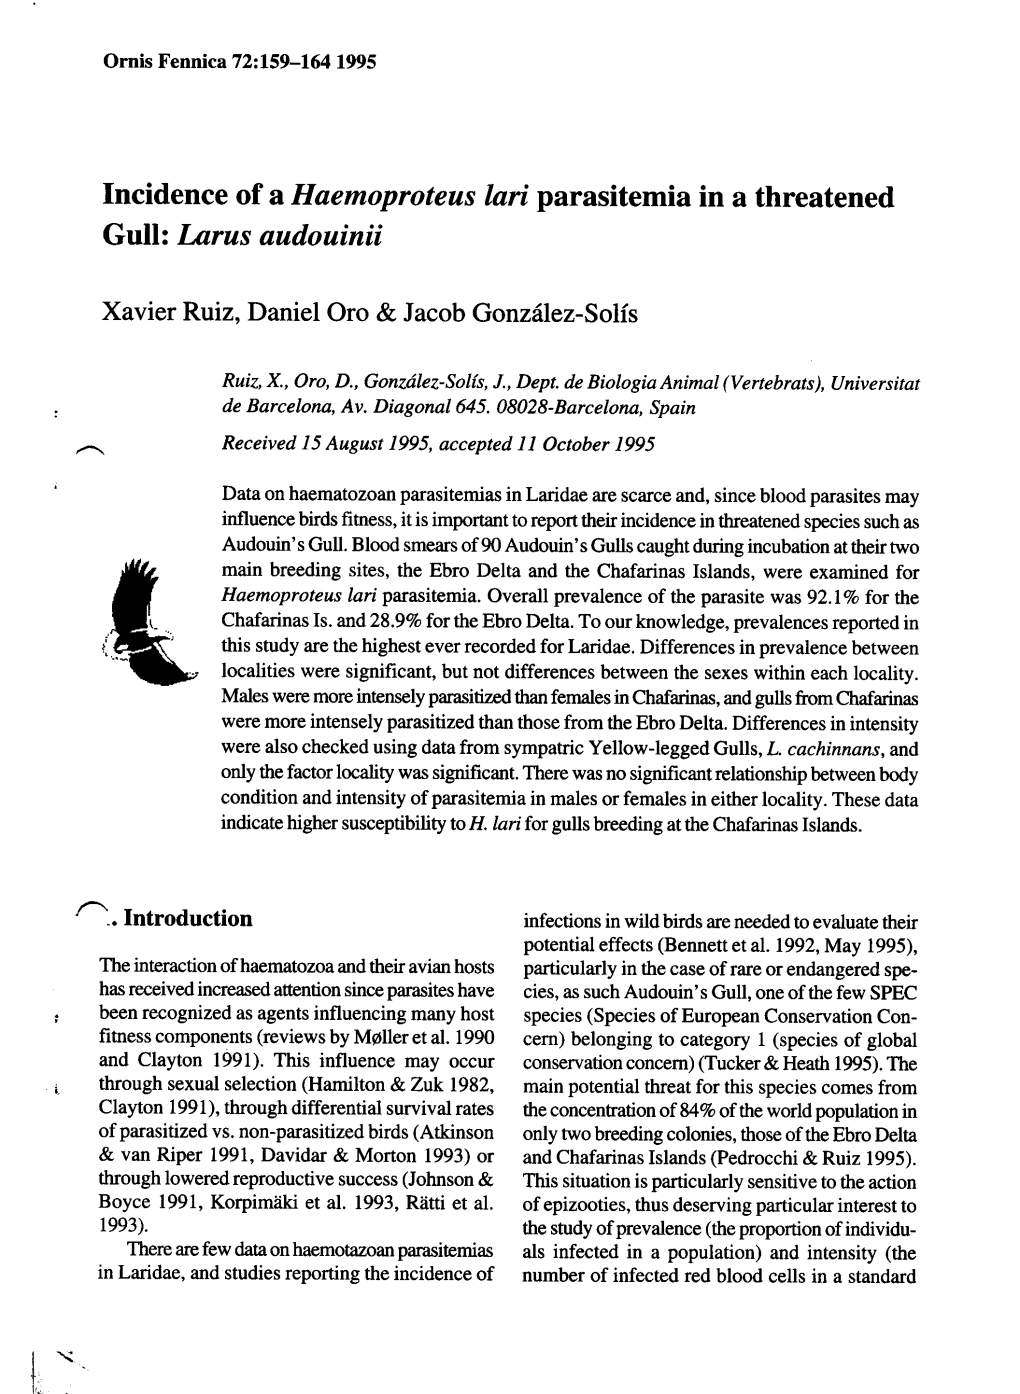 Incidence of a Haemoproteus Lari Parasitemia in a Threatened Goll